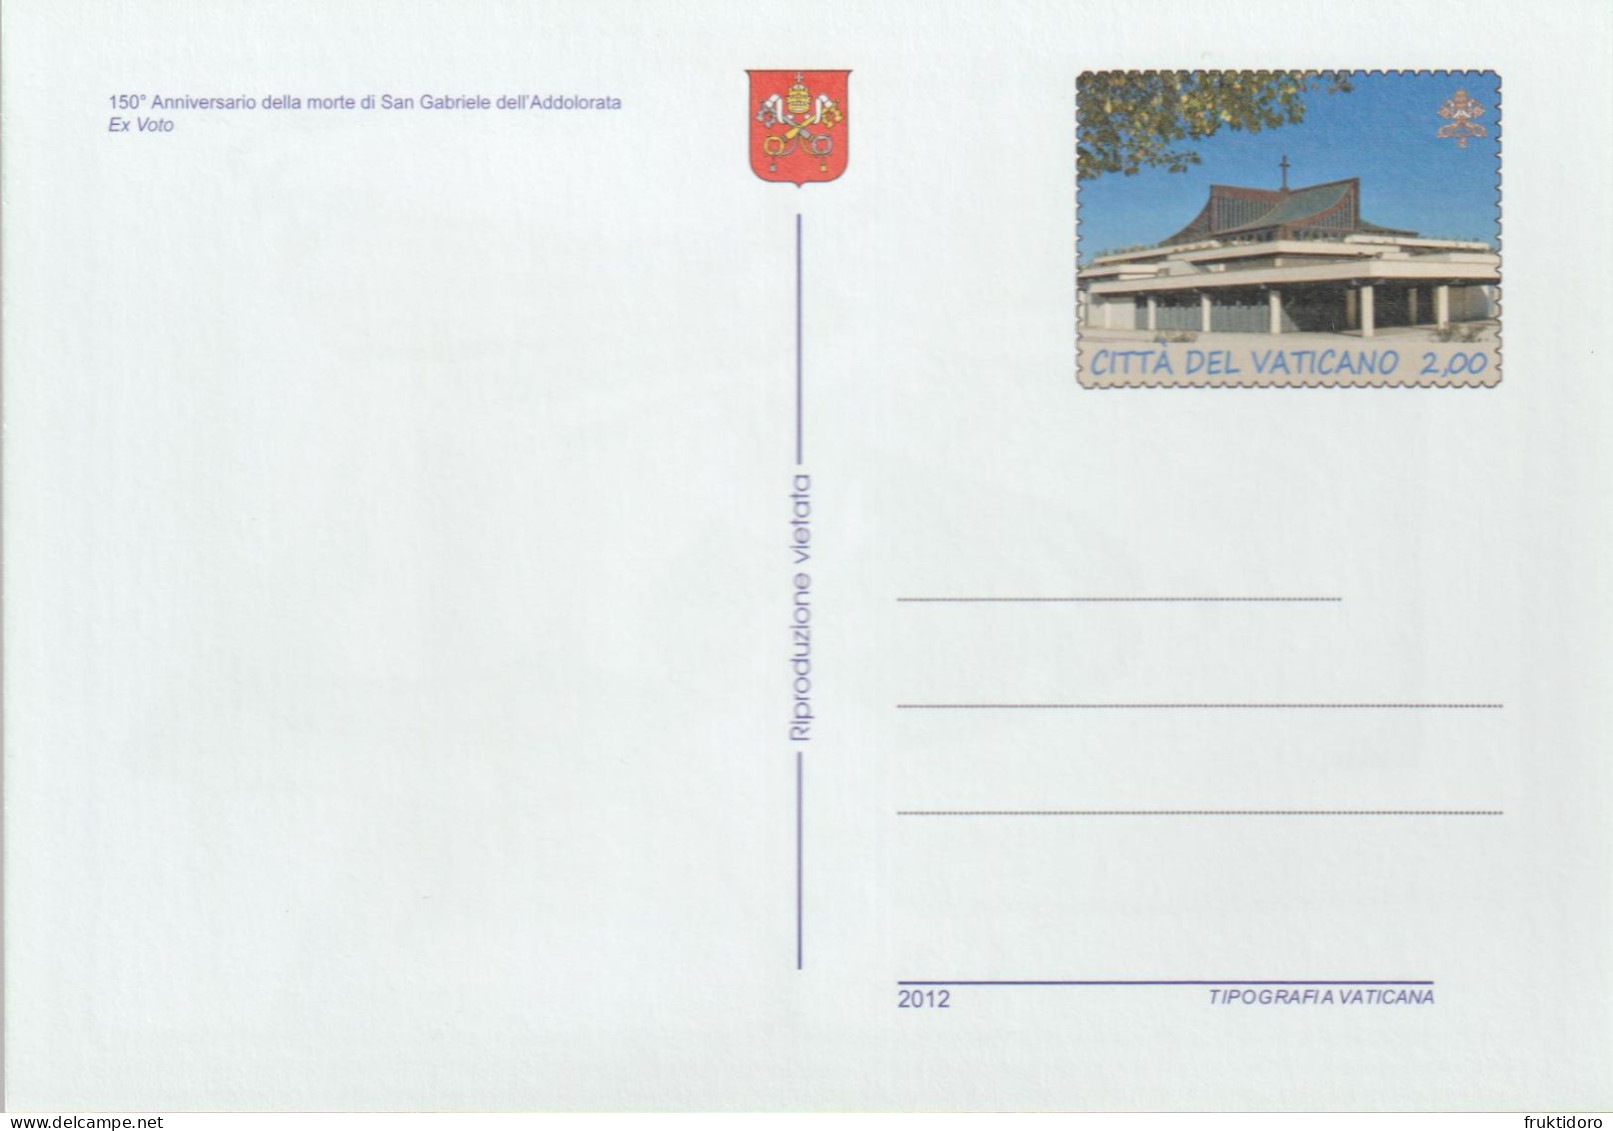 Vatican City Postal Stationery 2012 - Prepaid Postcards 150th Death Anniversary of St Gabrielle Dell'Addolorata **